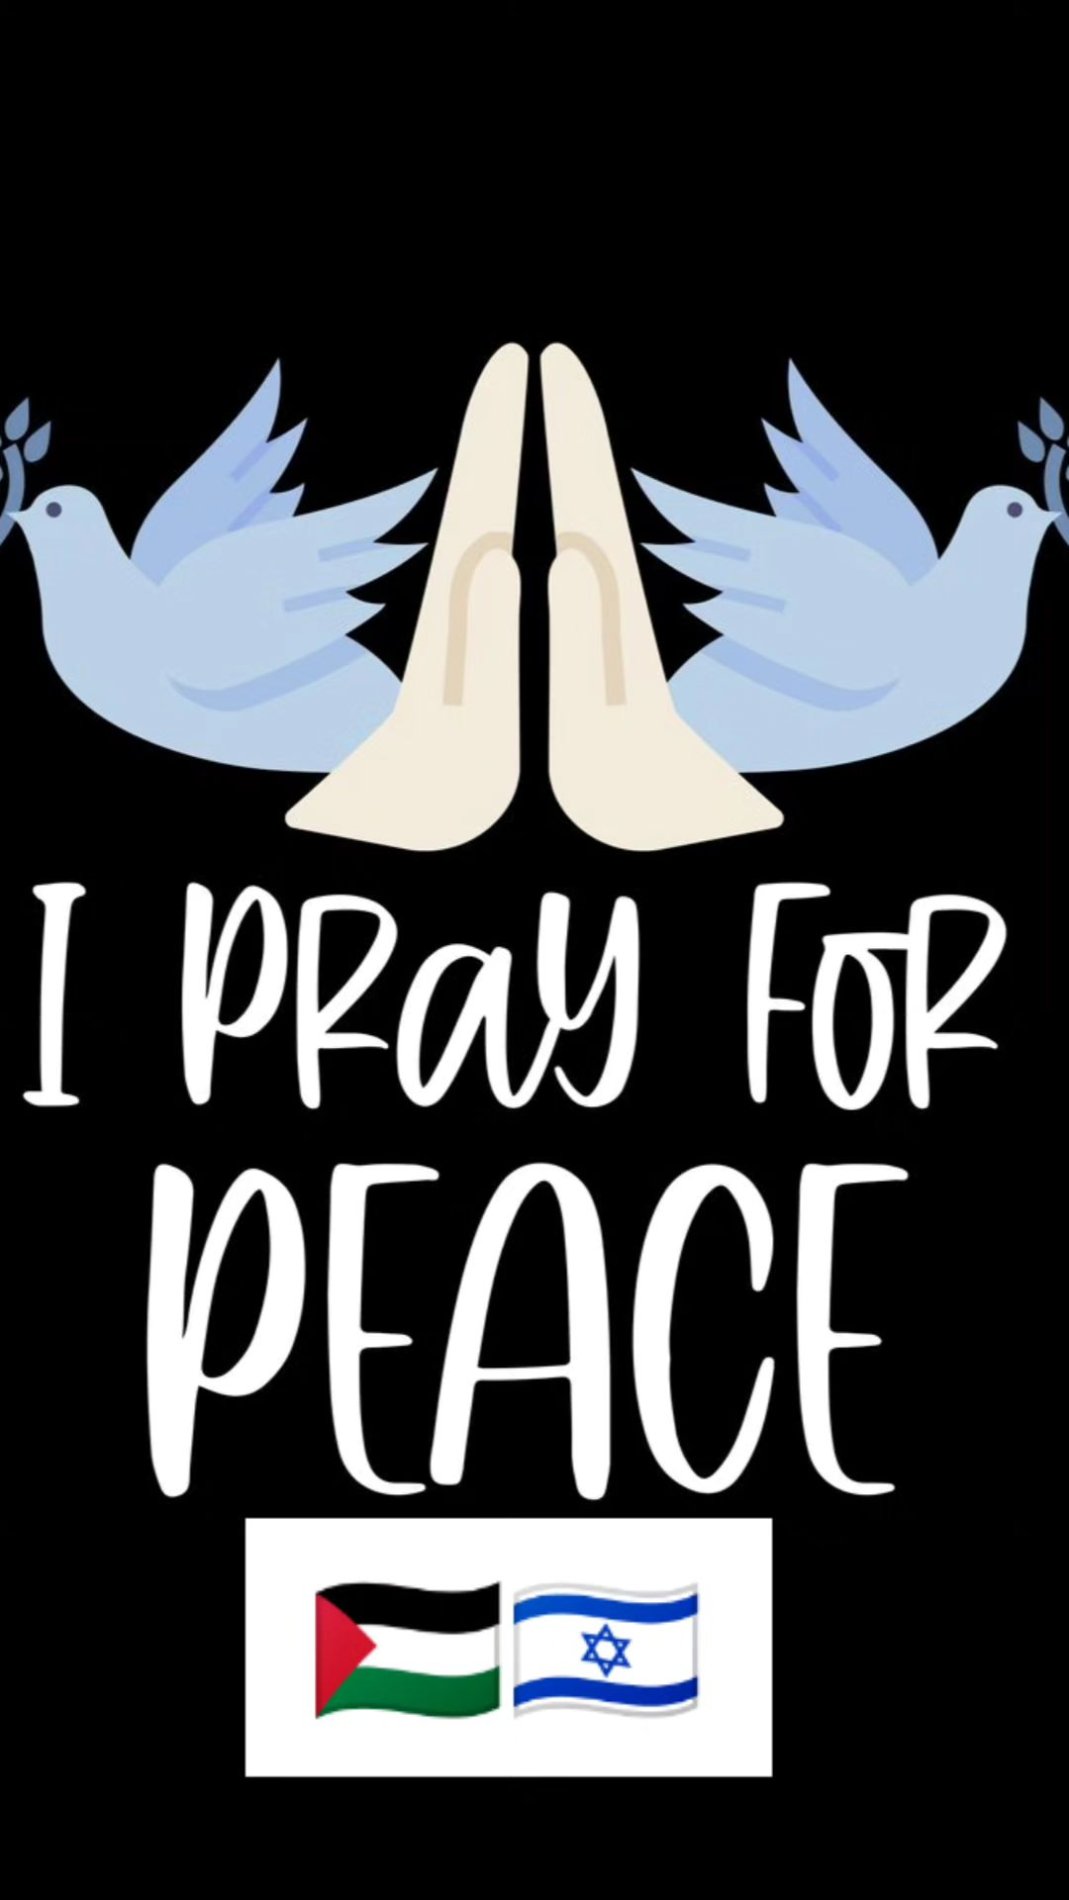 Isaac Palma moli za mir. Vir: Instagram